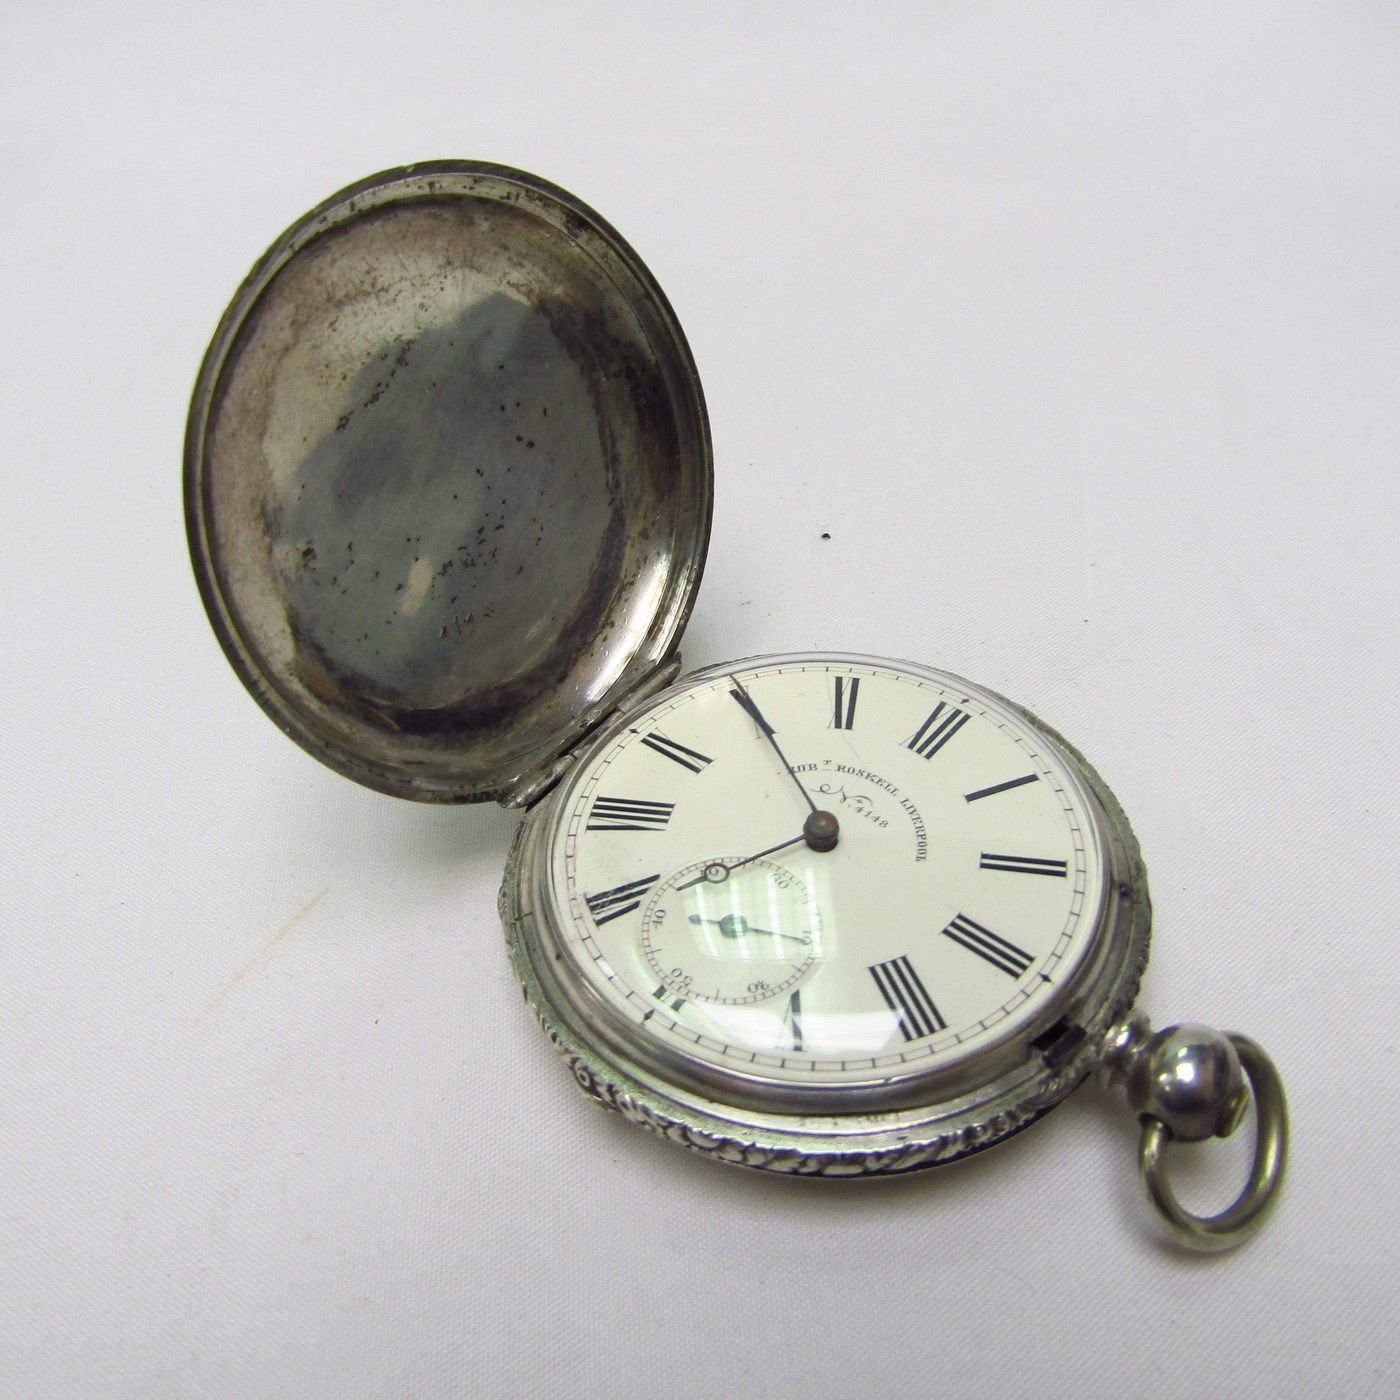 ROBT. ROSKELL (Liverpool) Pocket Watch, Saboneta. London, ca. 1830.